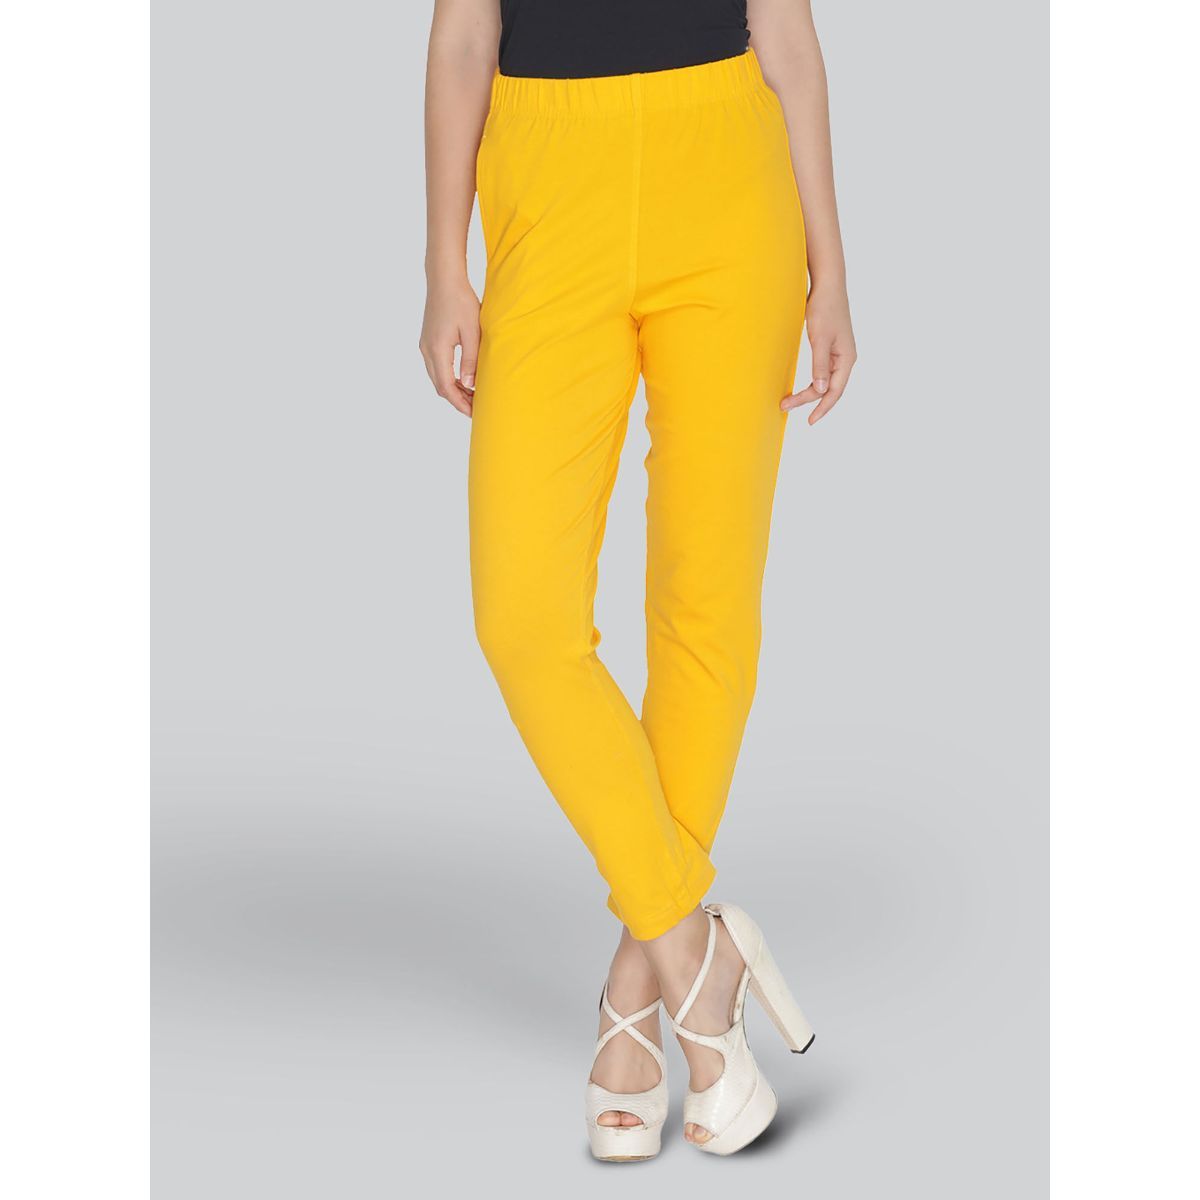 Buy Lyra Hosiery Plain/Solid Women's Regular Fit Free Size Kurti Pants with  Side Pocket (Orange) at Amazon.in